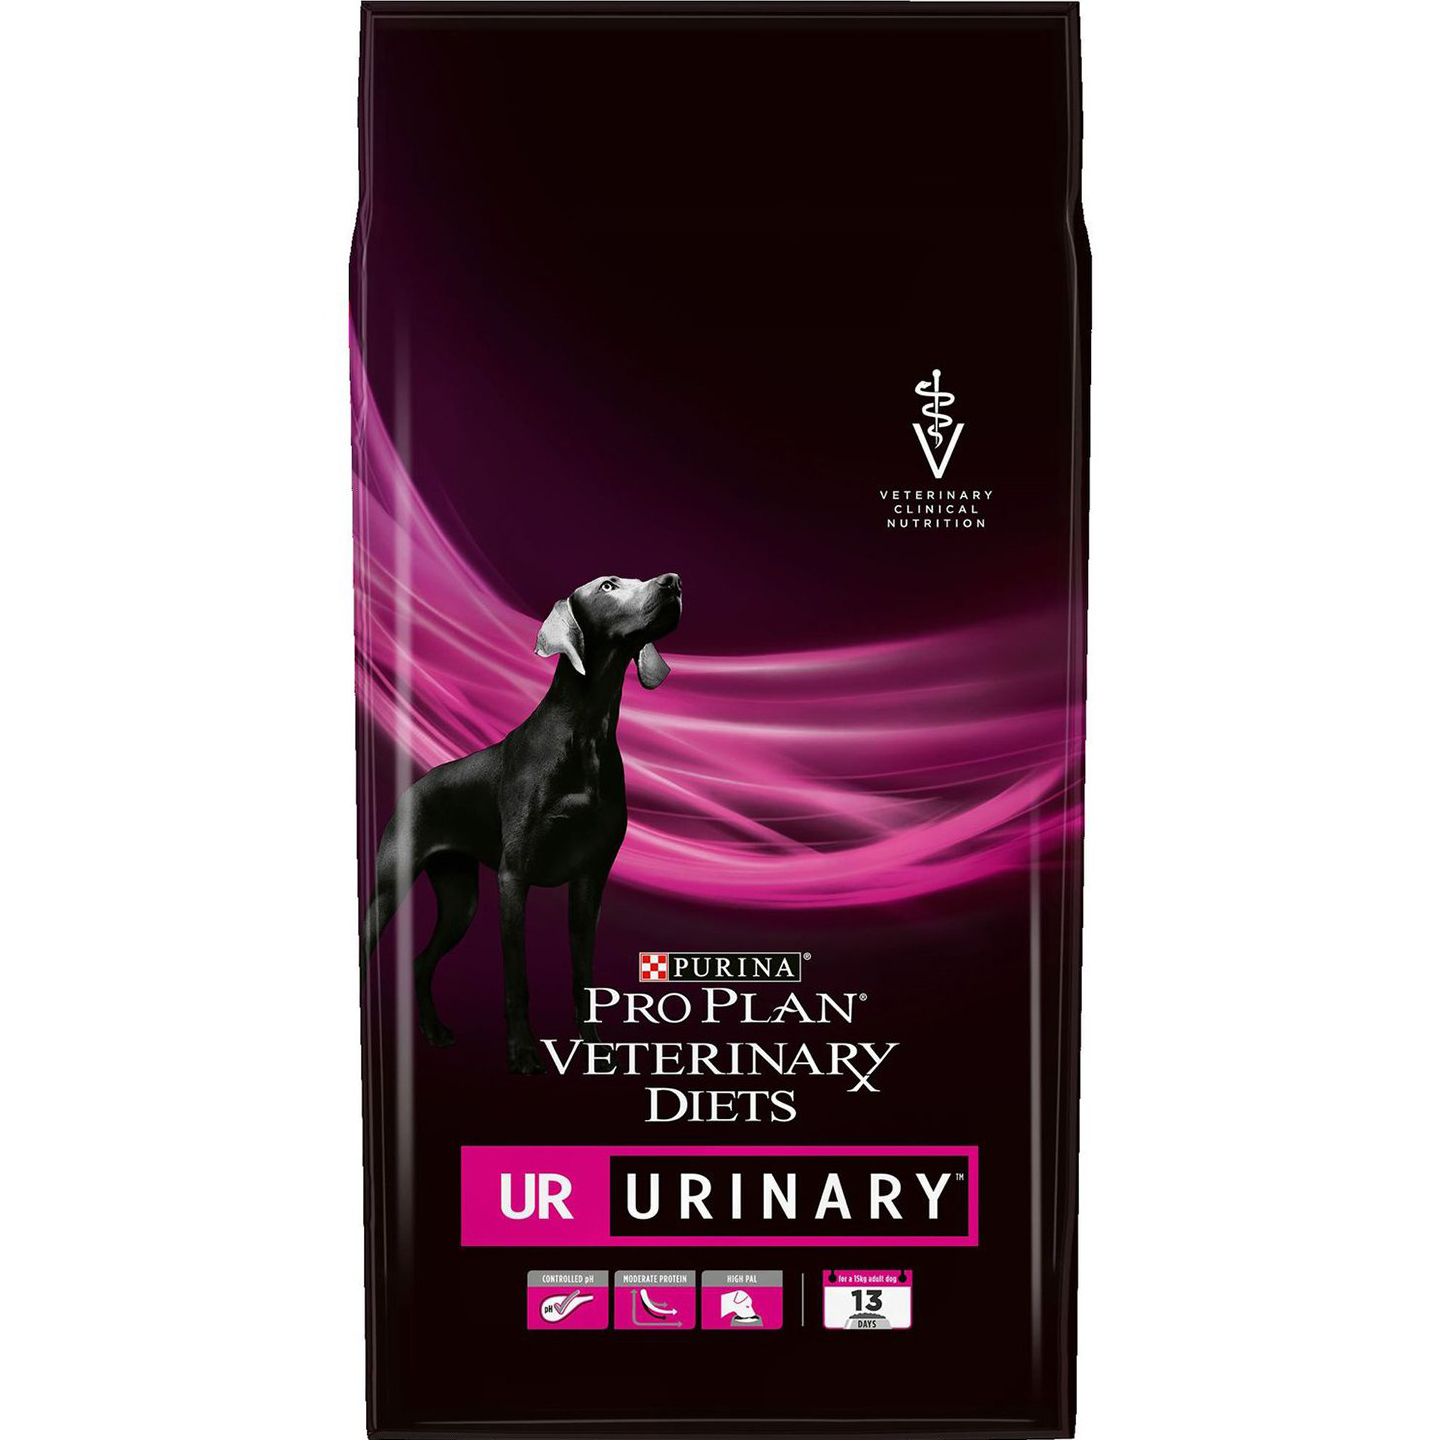 Корм для собак PRO PLAN Veterinary Diets UR Urinary При мочекаменной болезни 3 кг корм для собак berkley 5 конина с ягненком и яблоками 200 г